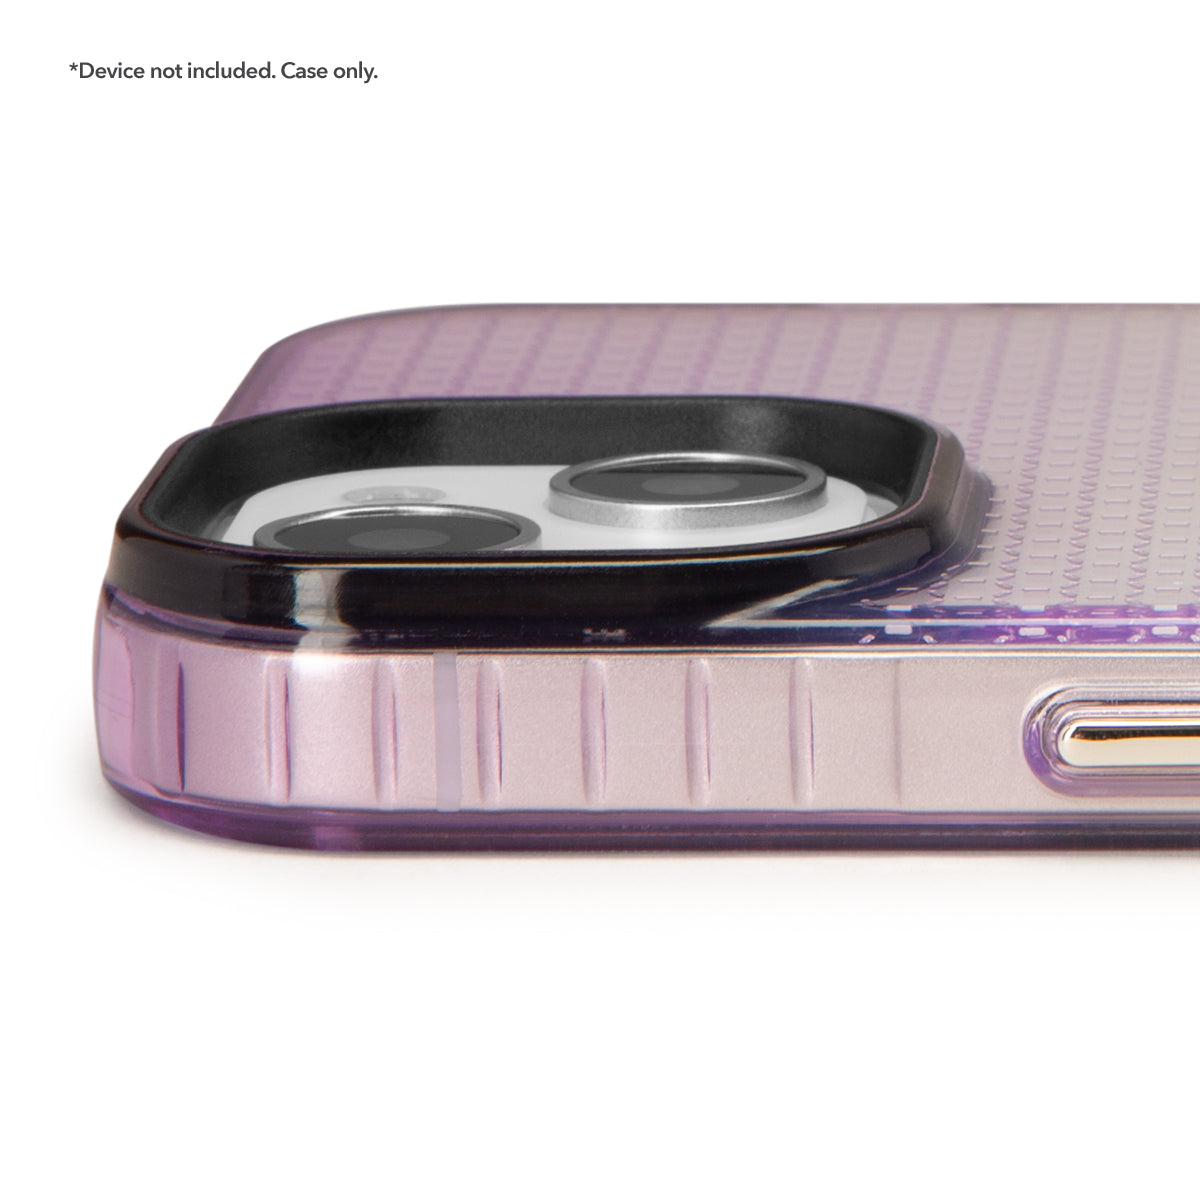 ShOx Ombre - iPhone 15 Plus Purple/ Blue w/ MagSafe Cases